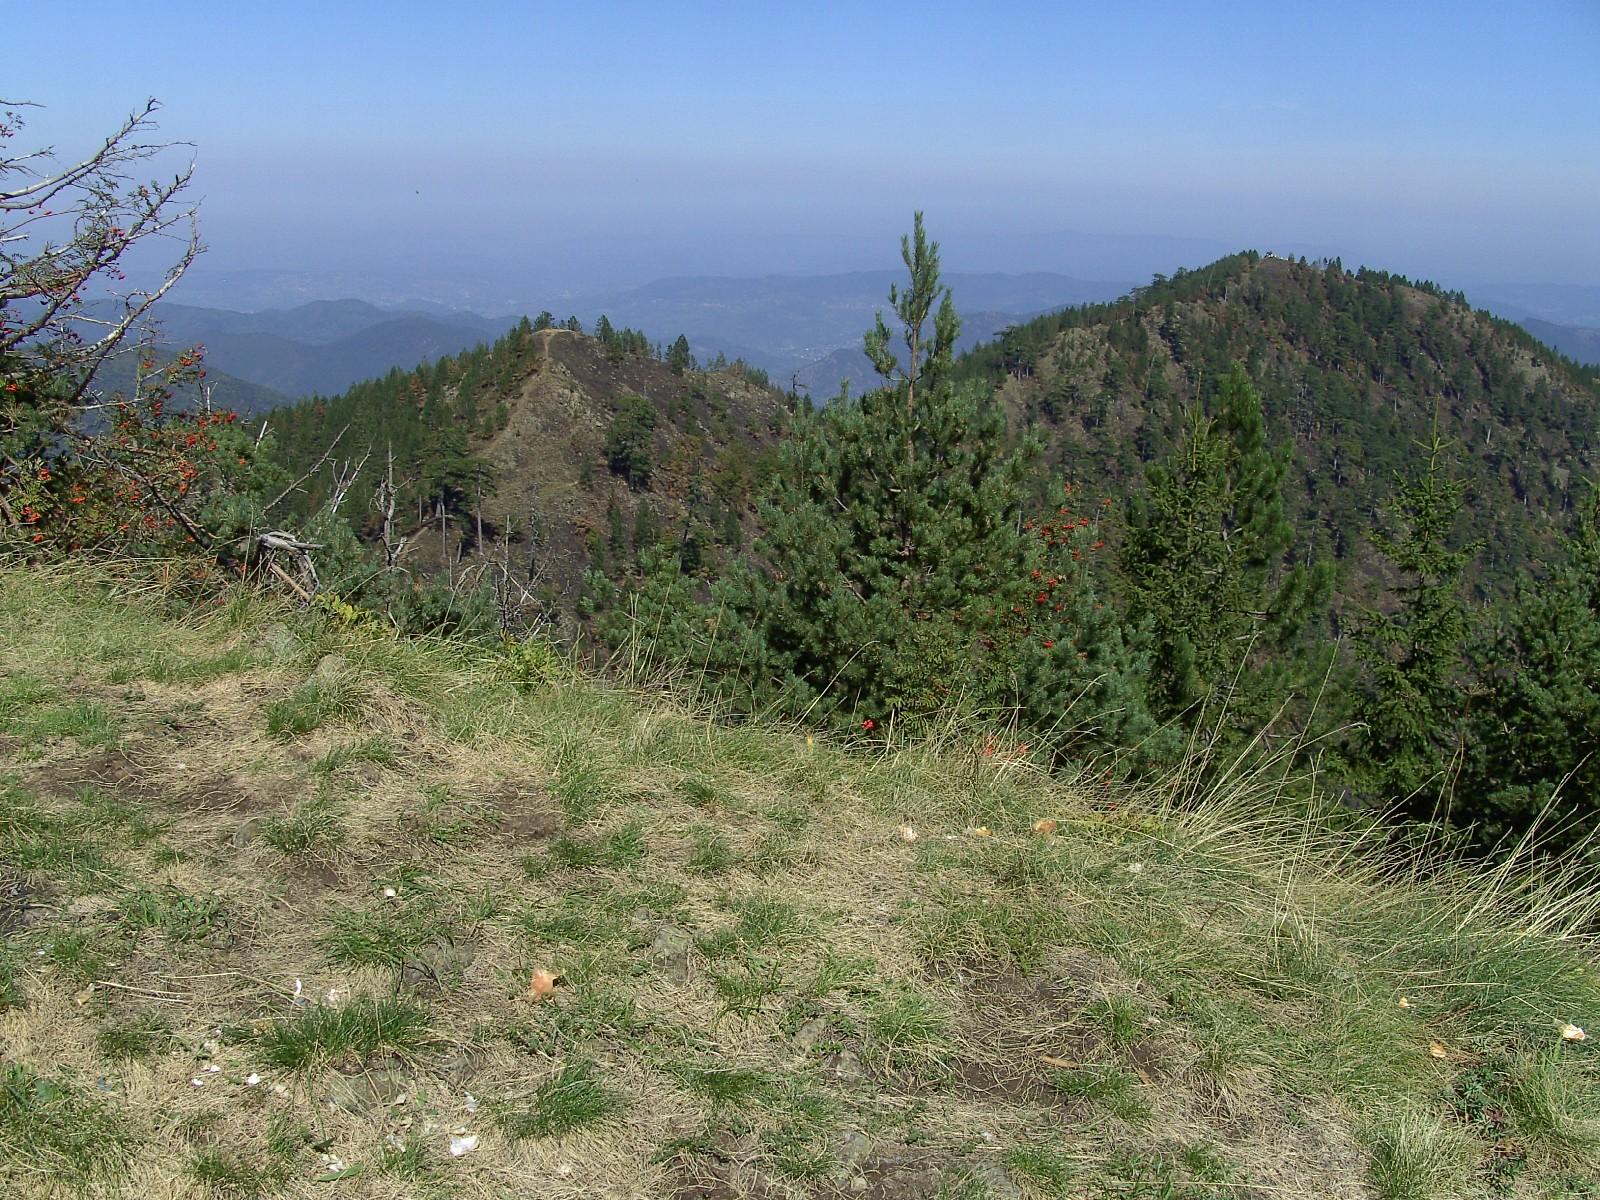 Nestao planinar iz Kaknja: Gorske službe spašavanja ga traže